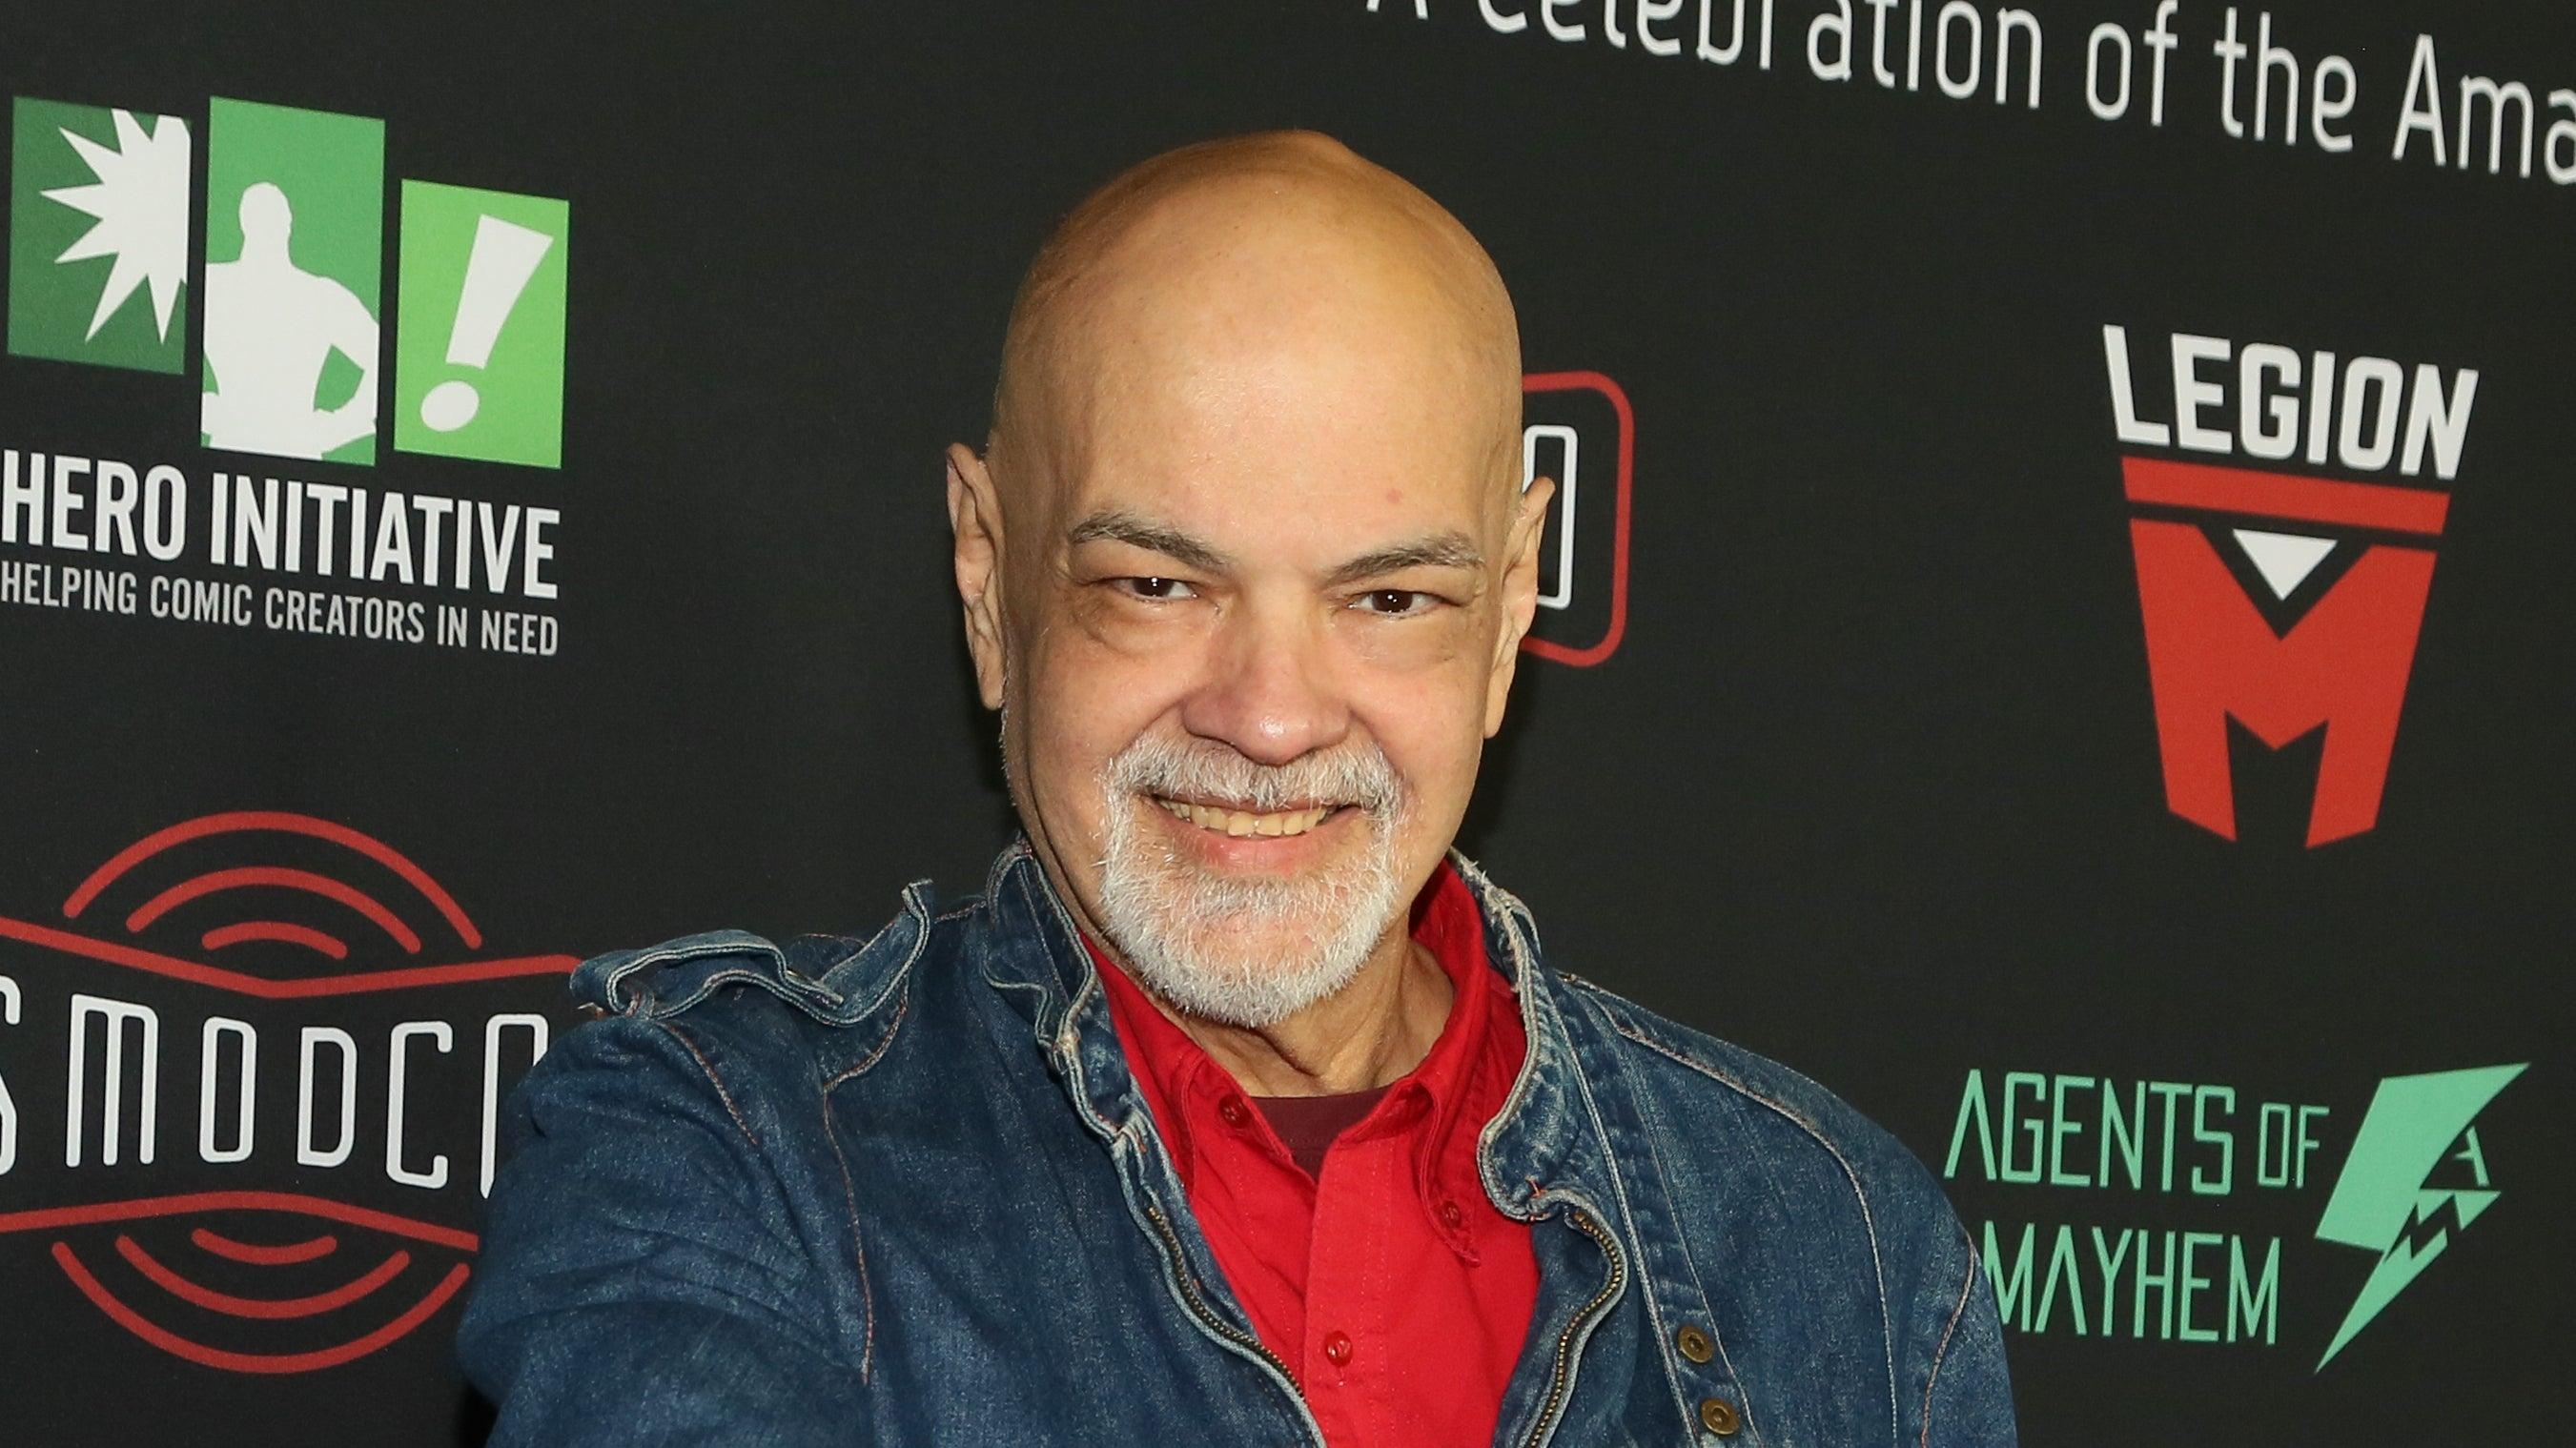 Legendary comic book creator George Pérez says he has inoperable cancer